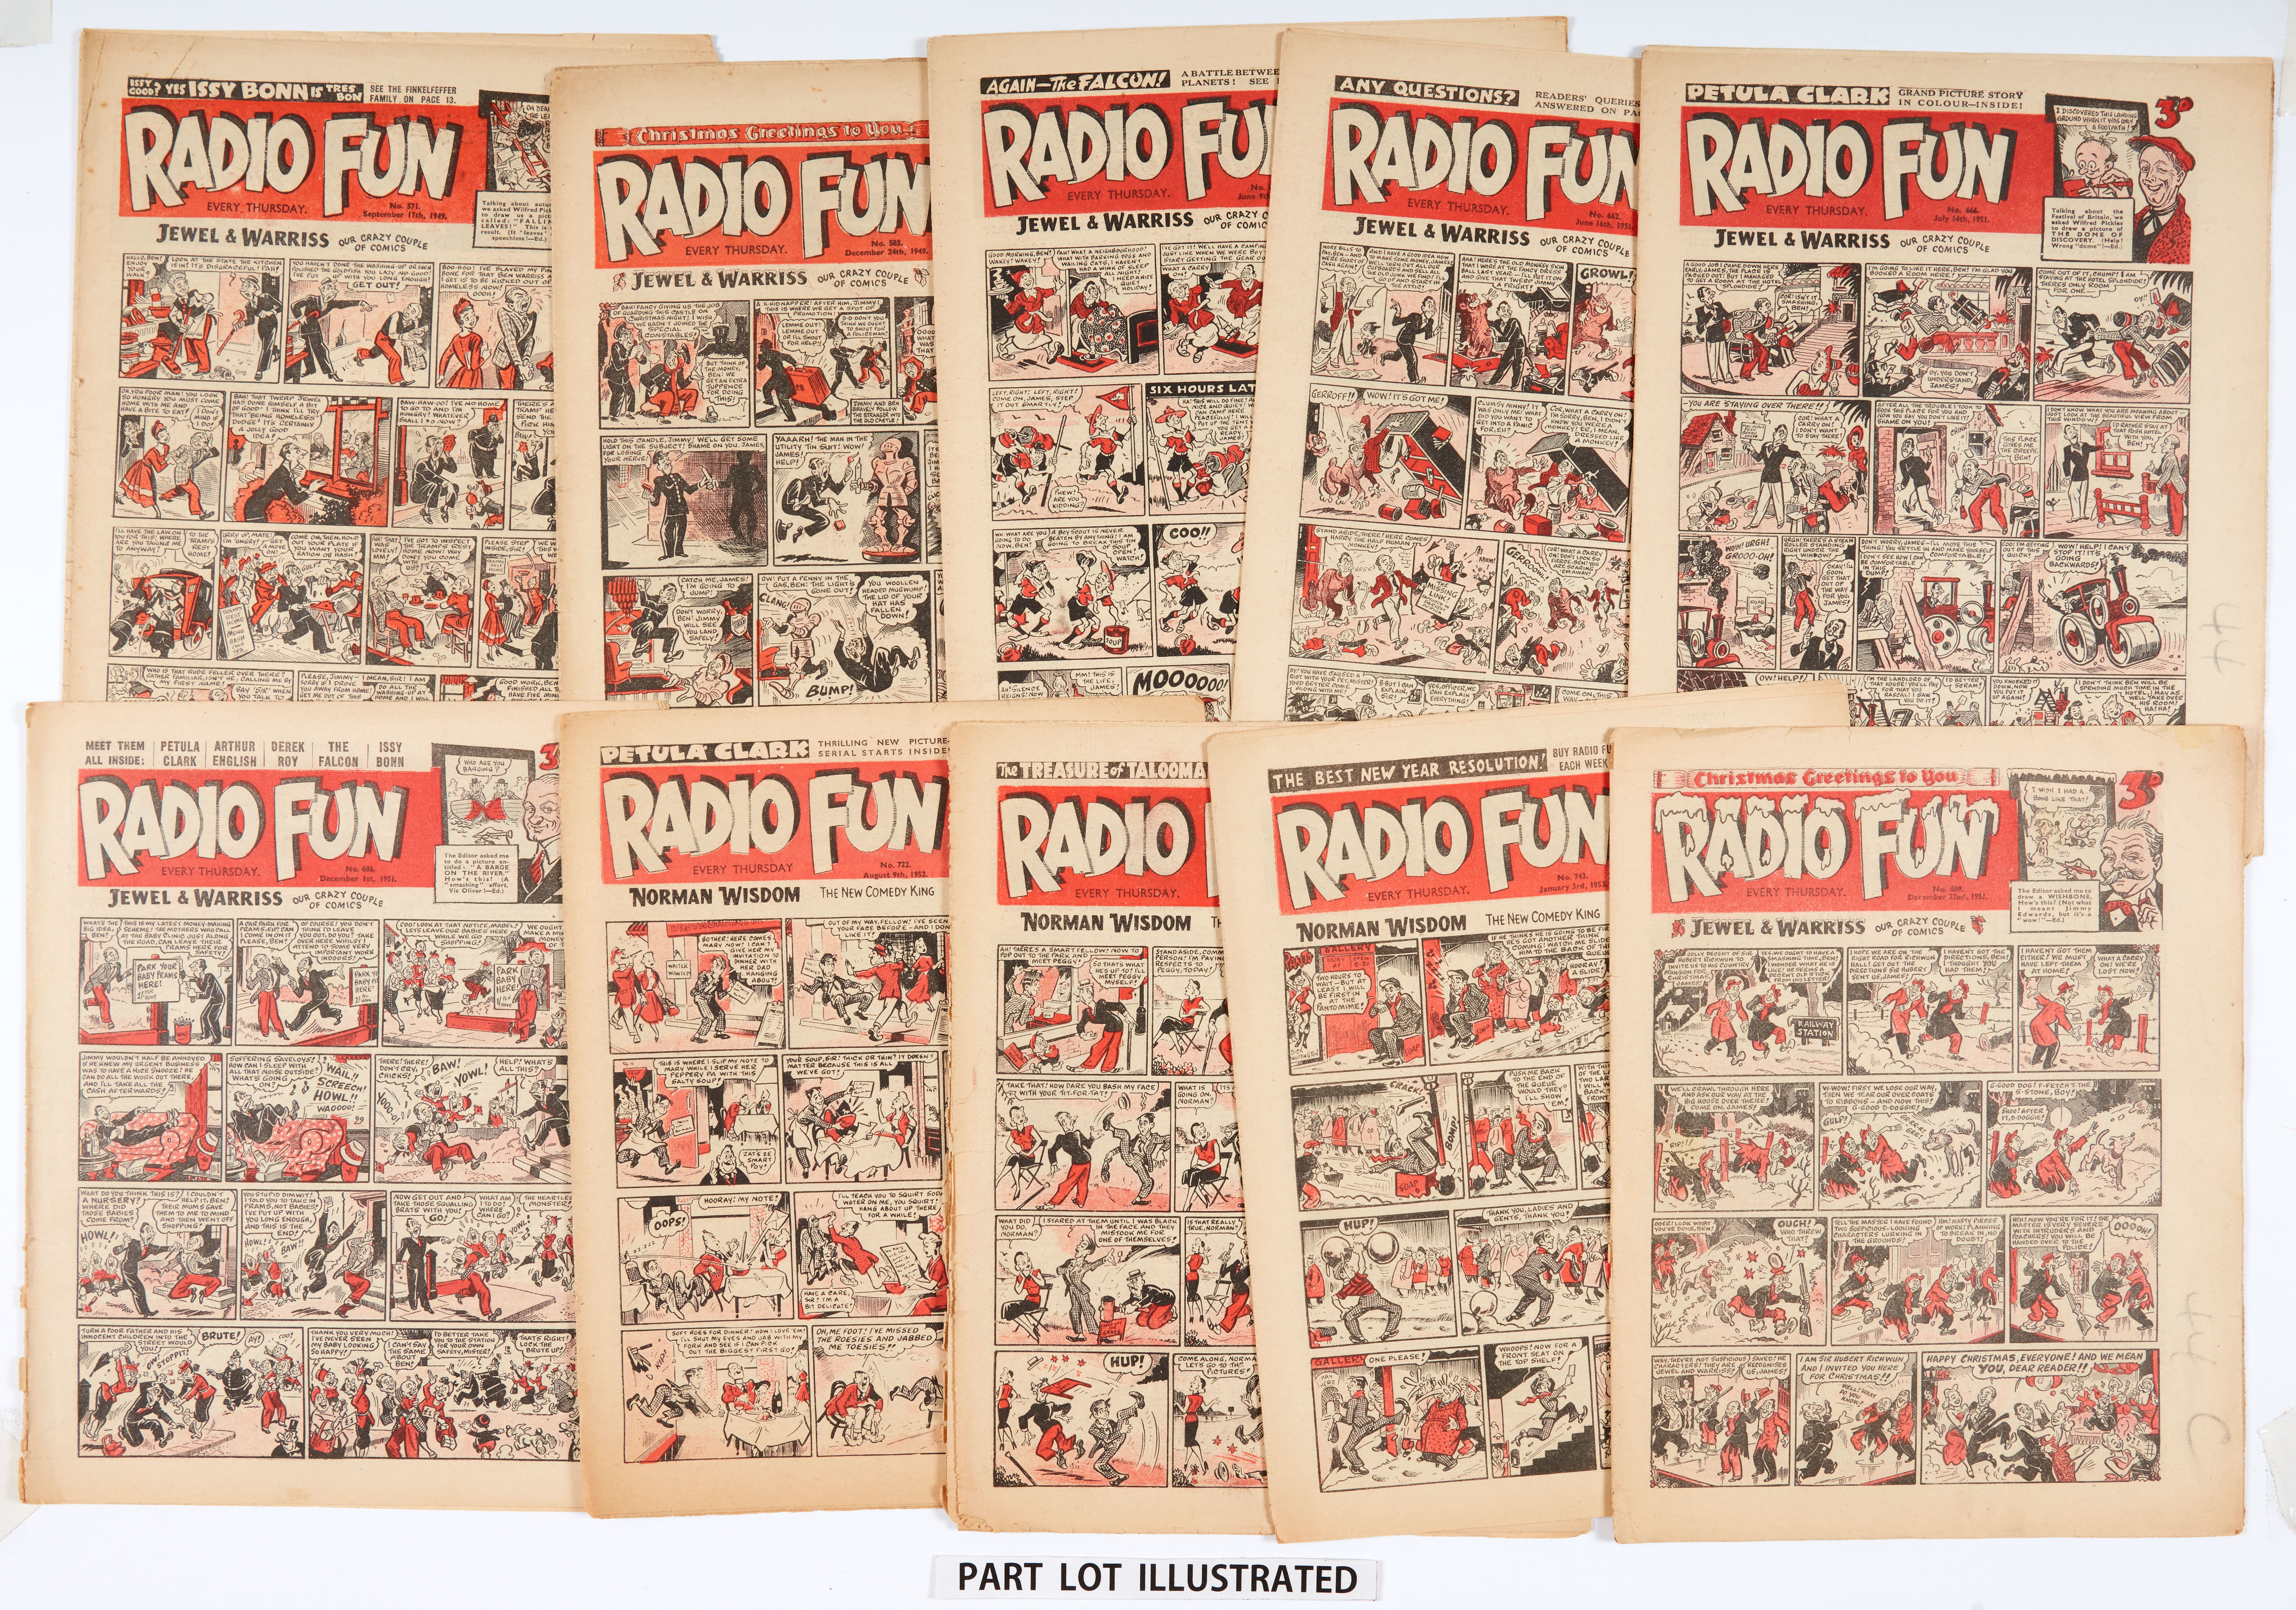 Radio Fun (1949-53). Starring Jewel & Warriss, Norman Wisdom, Jane X, Arthur English, The Beverley